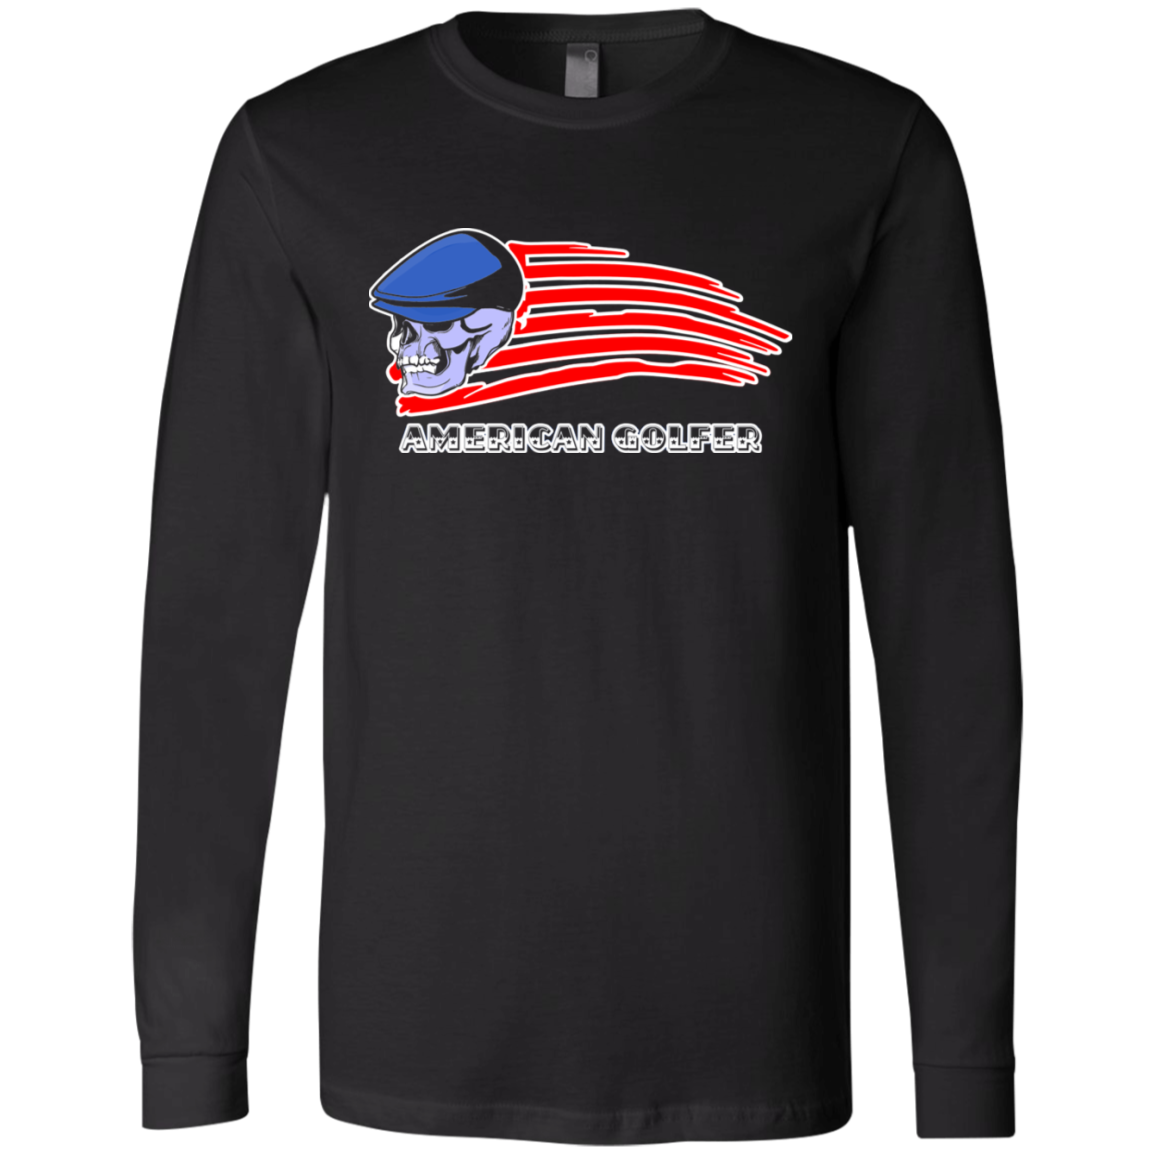 OPG Custom Design #12. Golf America. Male Edition. Jersey Long Sleeve T-Shirt